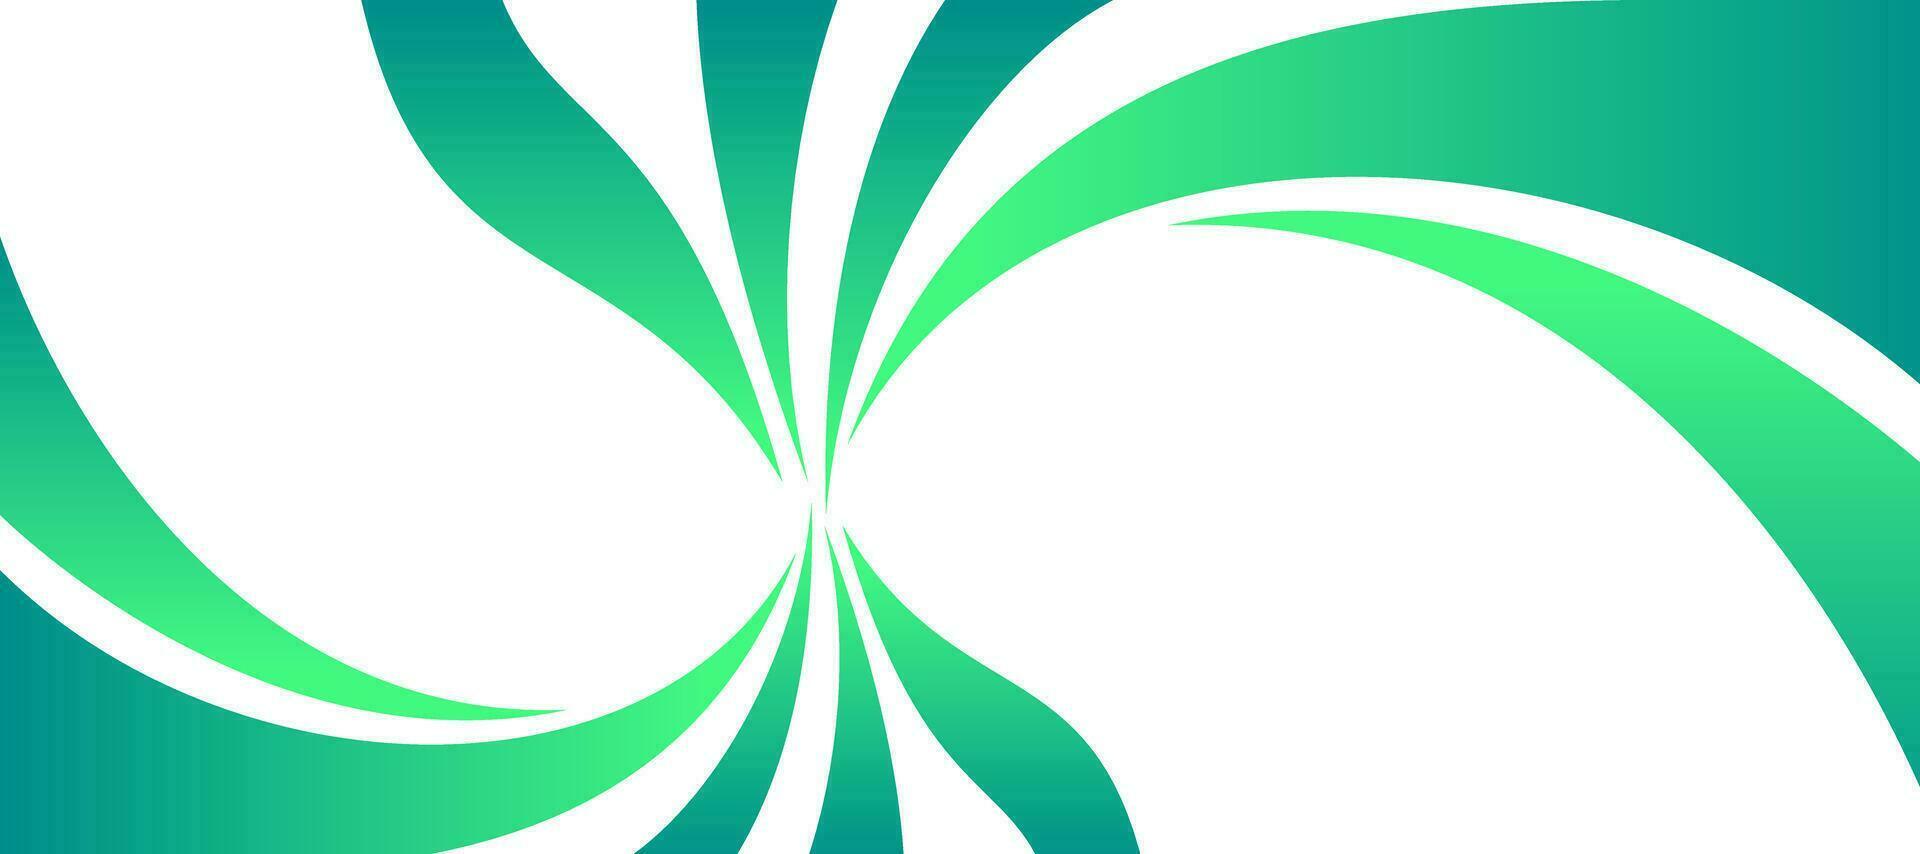 groen helling circulaire kromme golven banier brochure folder ontwerp achtergrond vector